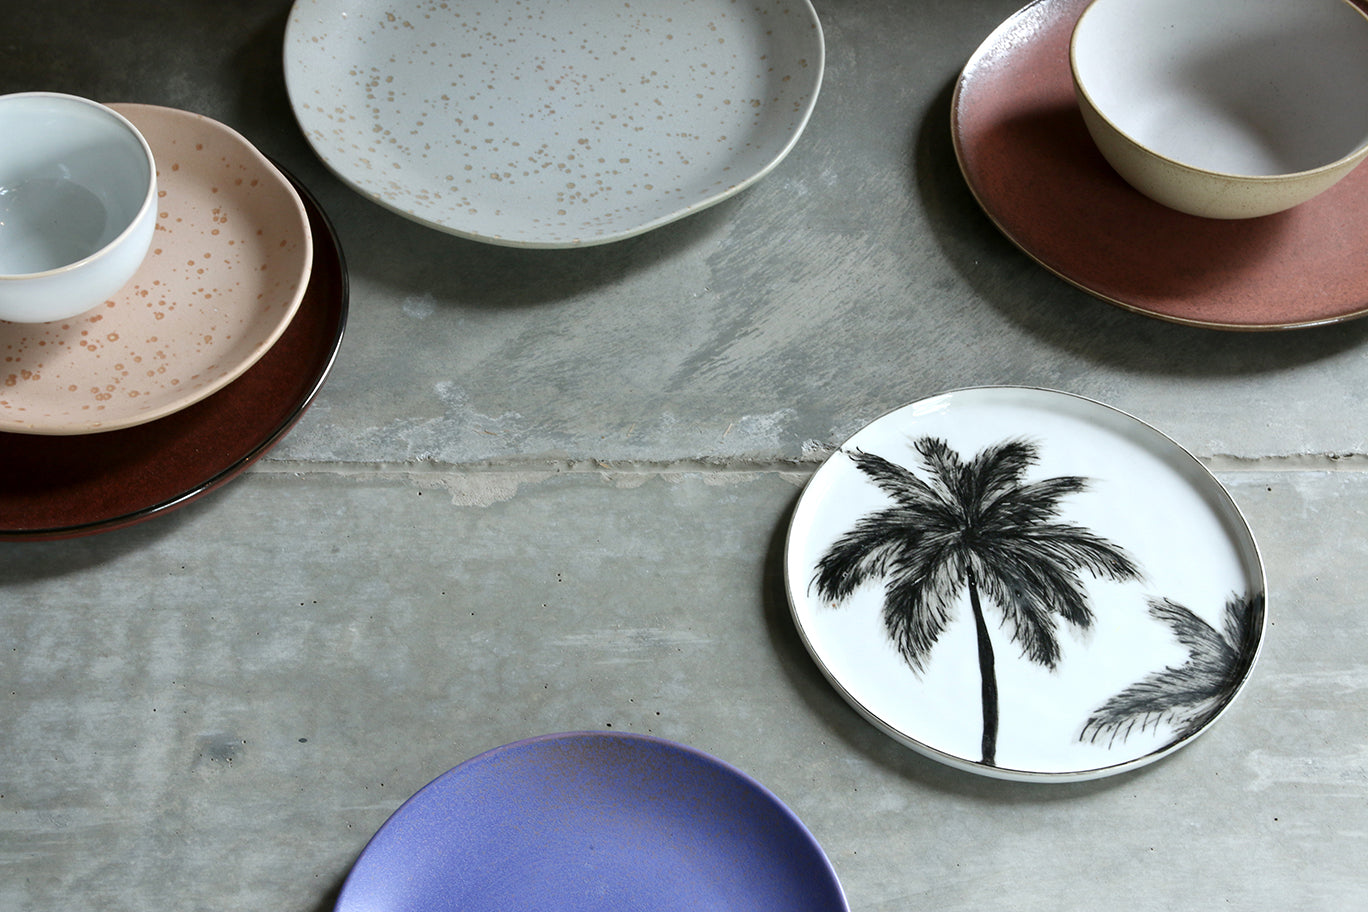 Porcelain Side Plate Palms van HKliving te koop bij LEEF mode en accessoires Meppel